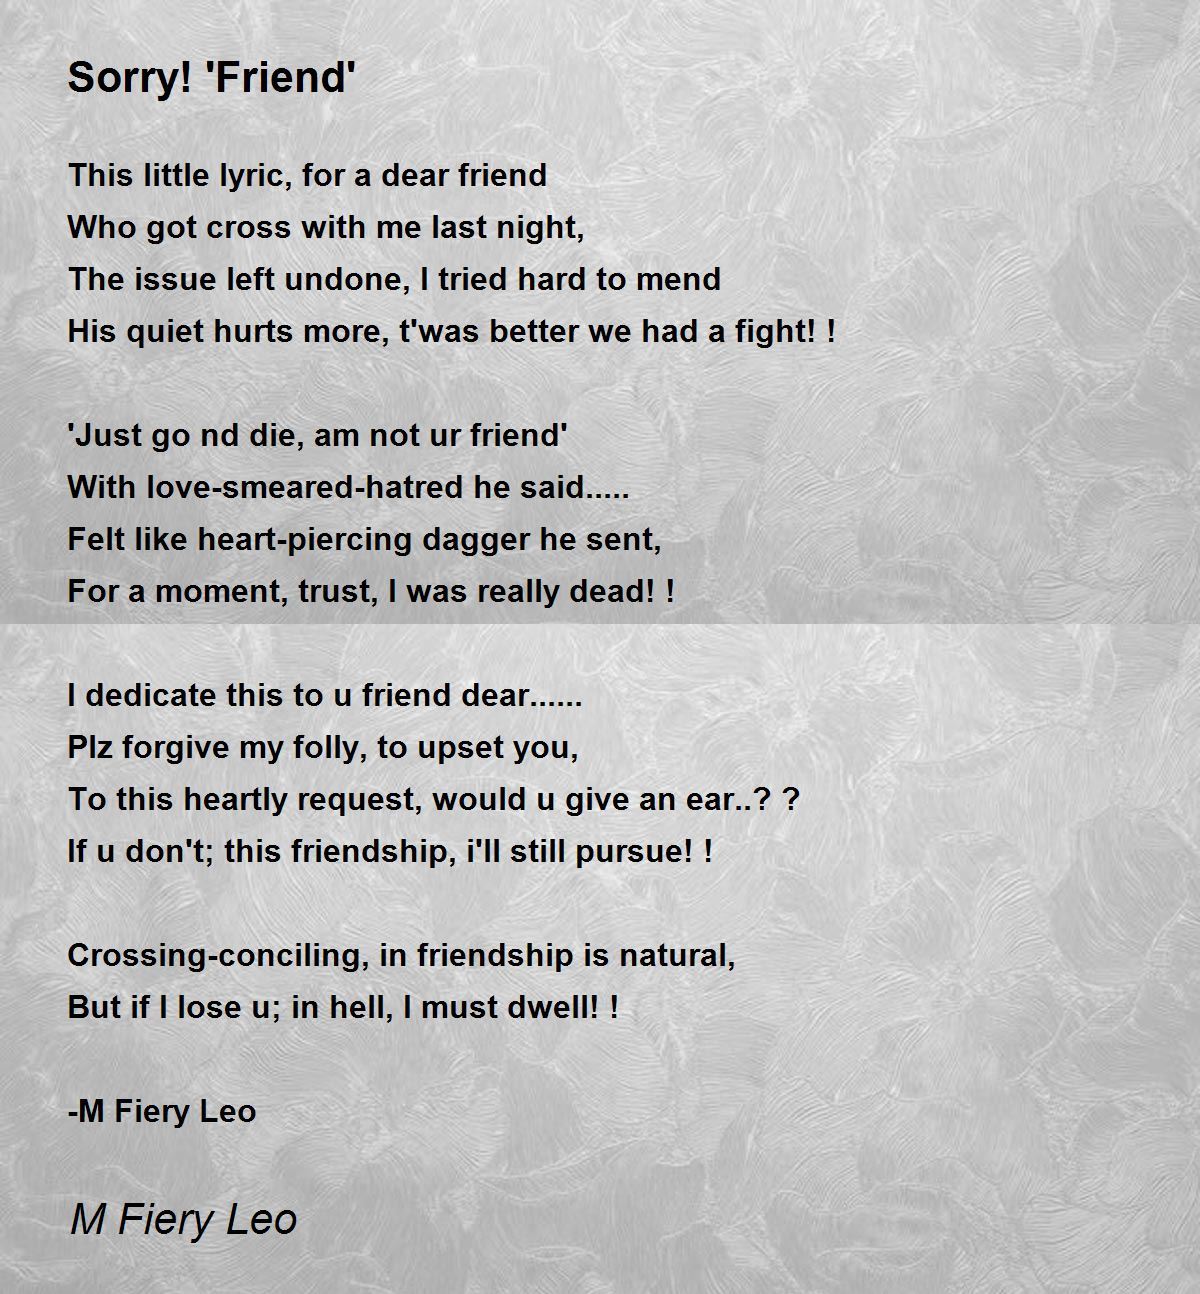 Sorry! 'Friend' - Sorry! 'Friend' Poem by M Fiery Leo